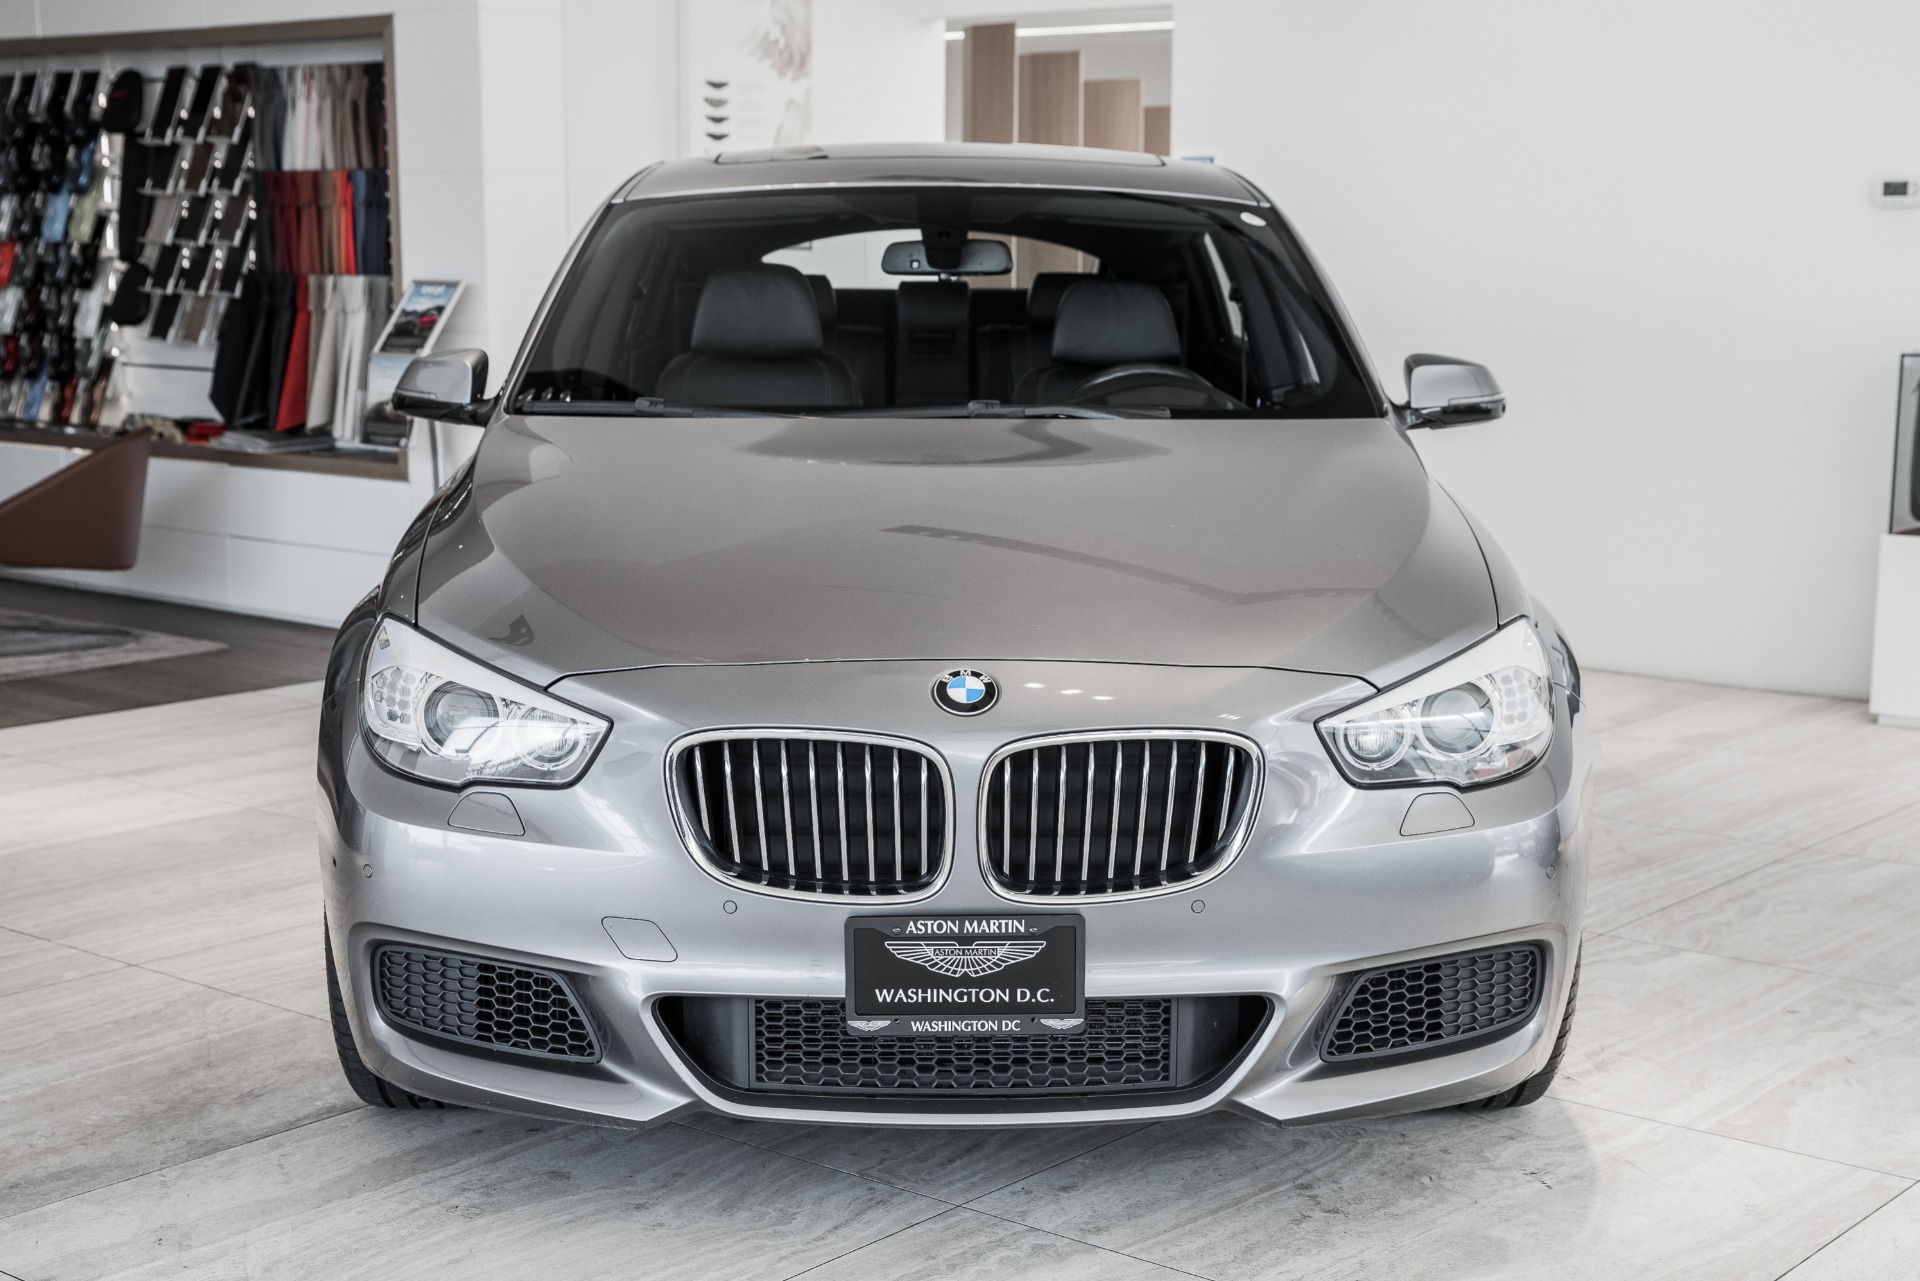  4 llantas plateadas de 18 pulgadas escalonadas M3 F10 se adapta  a BMW Serie 5 XDRIVE 535I 550I 535XI : Automotriz